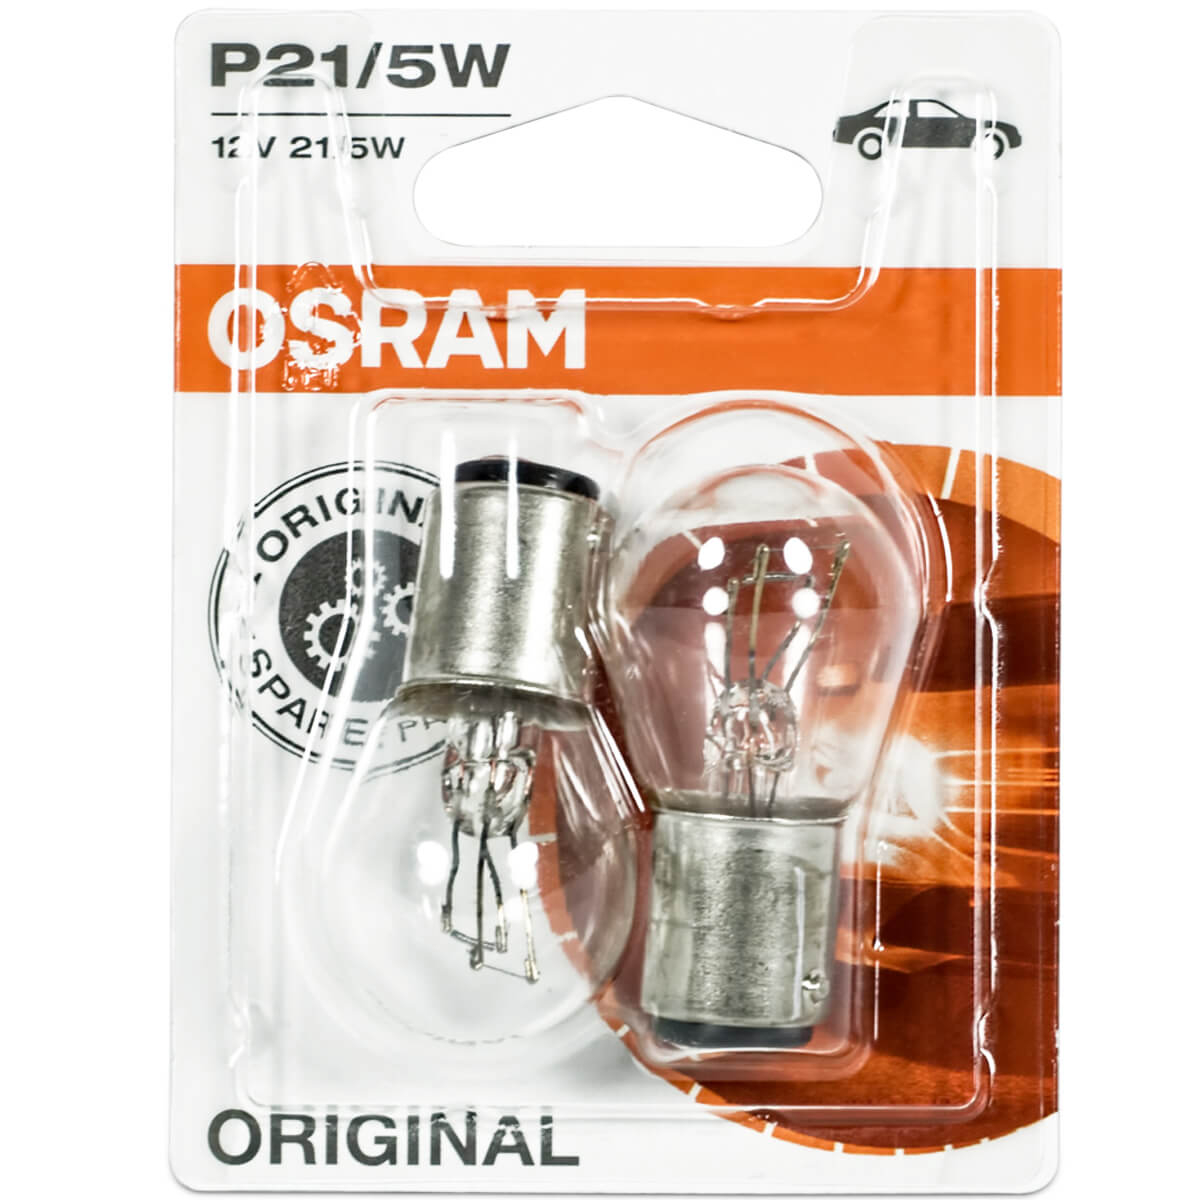 Osram Original Line 7528-02B P21/5W signal lamps